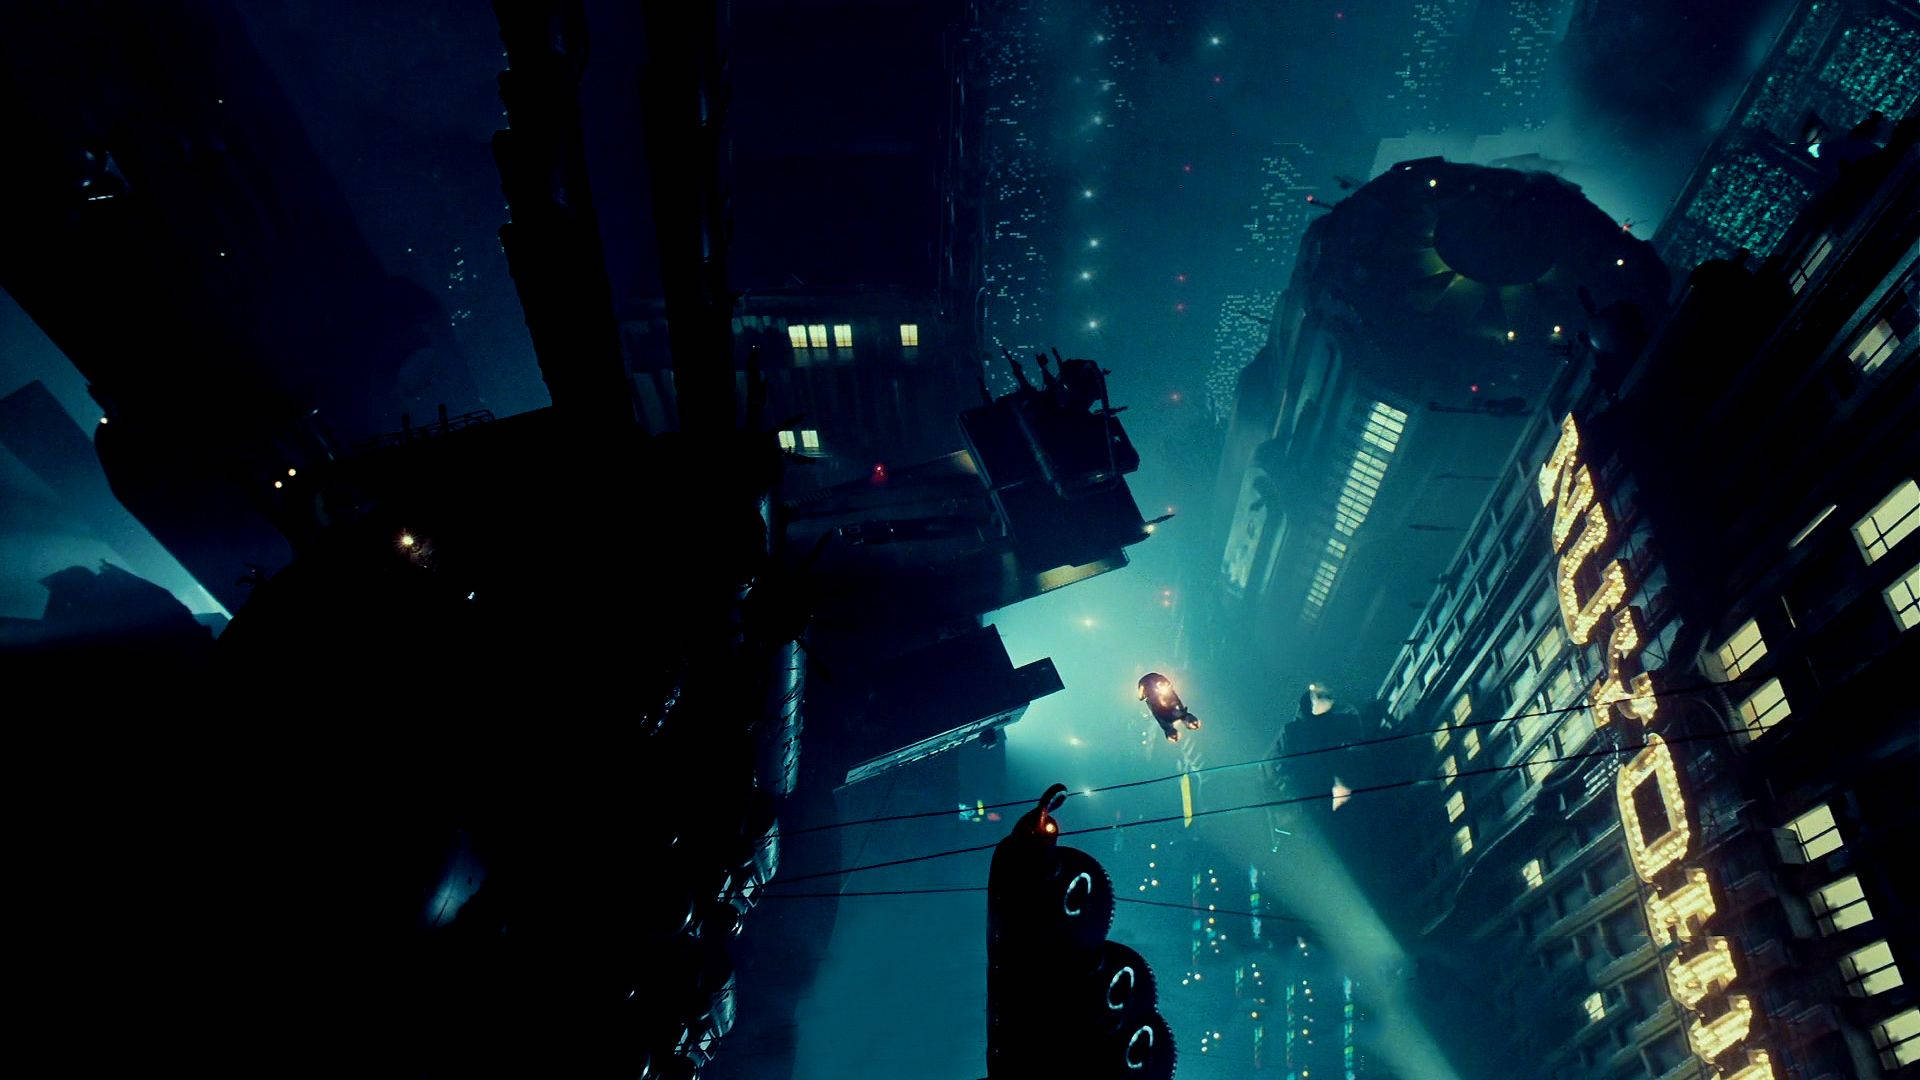 Blade Runner 2049 Futuristic City Background